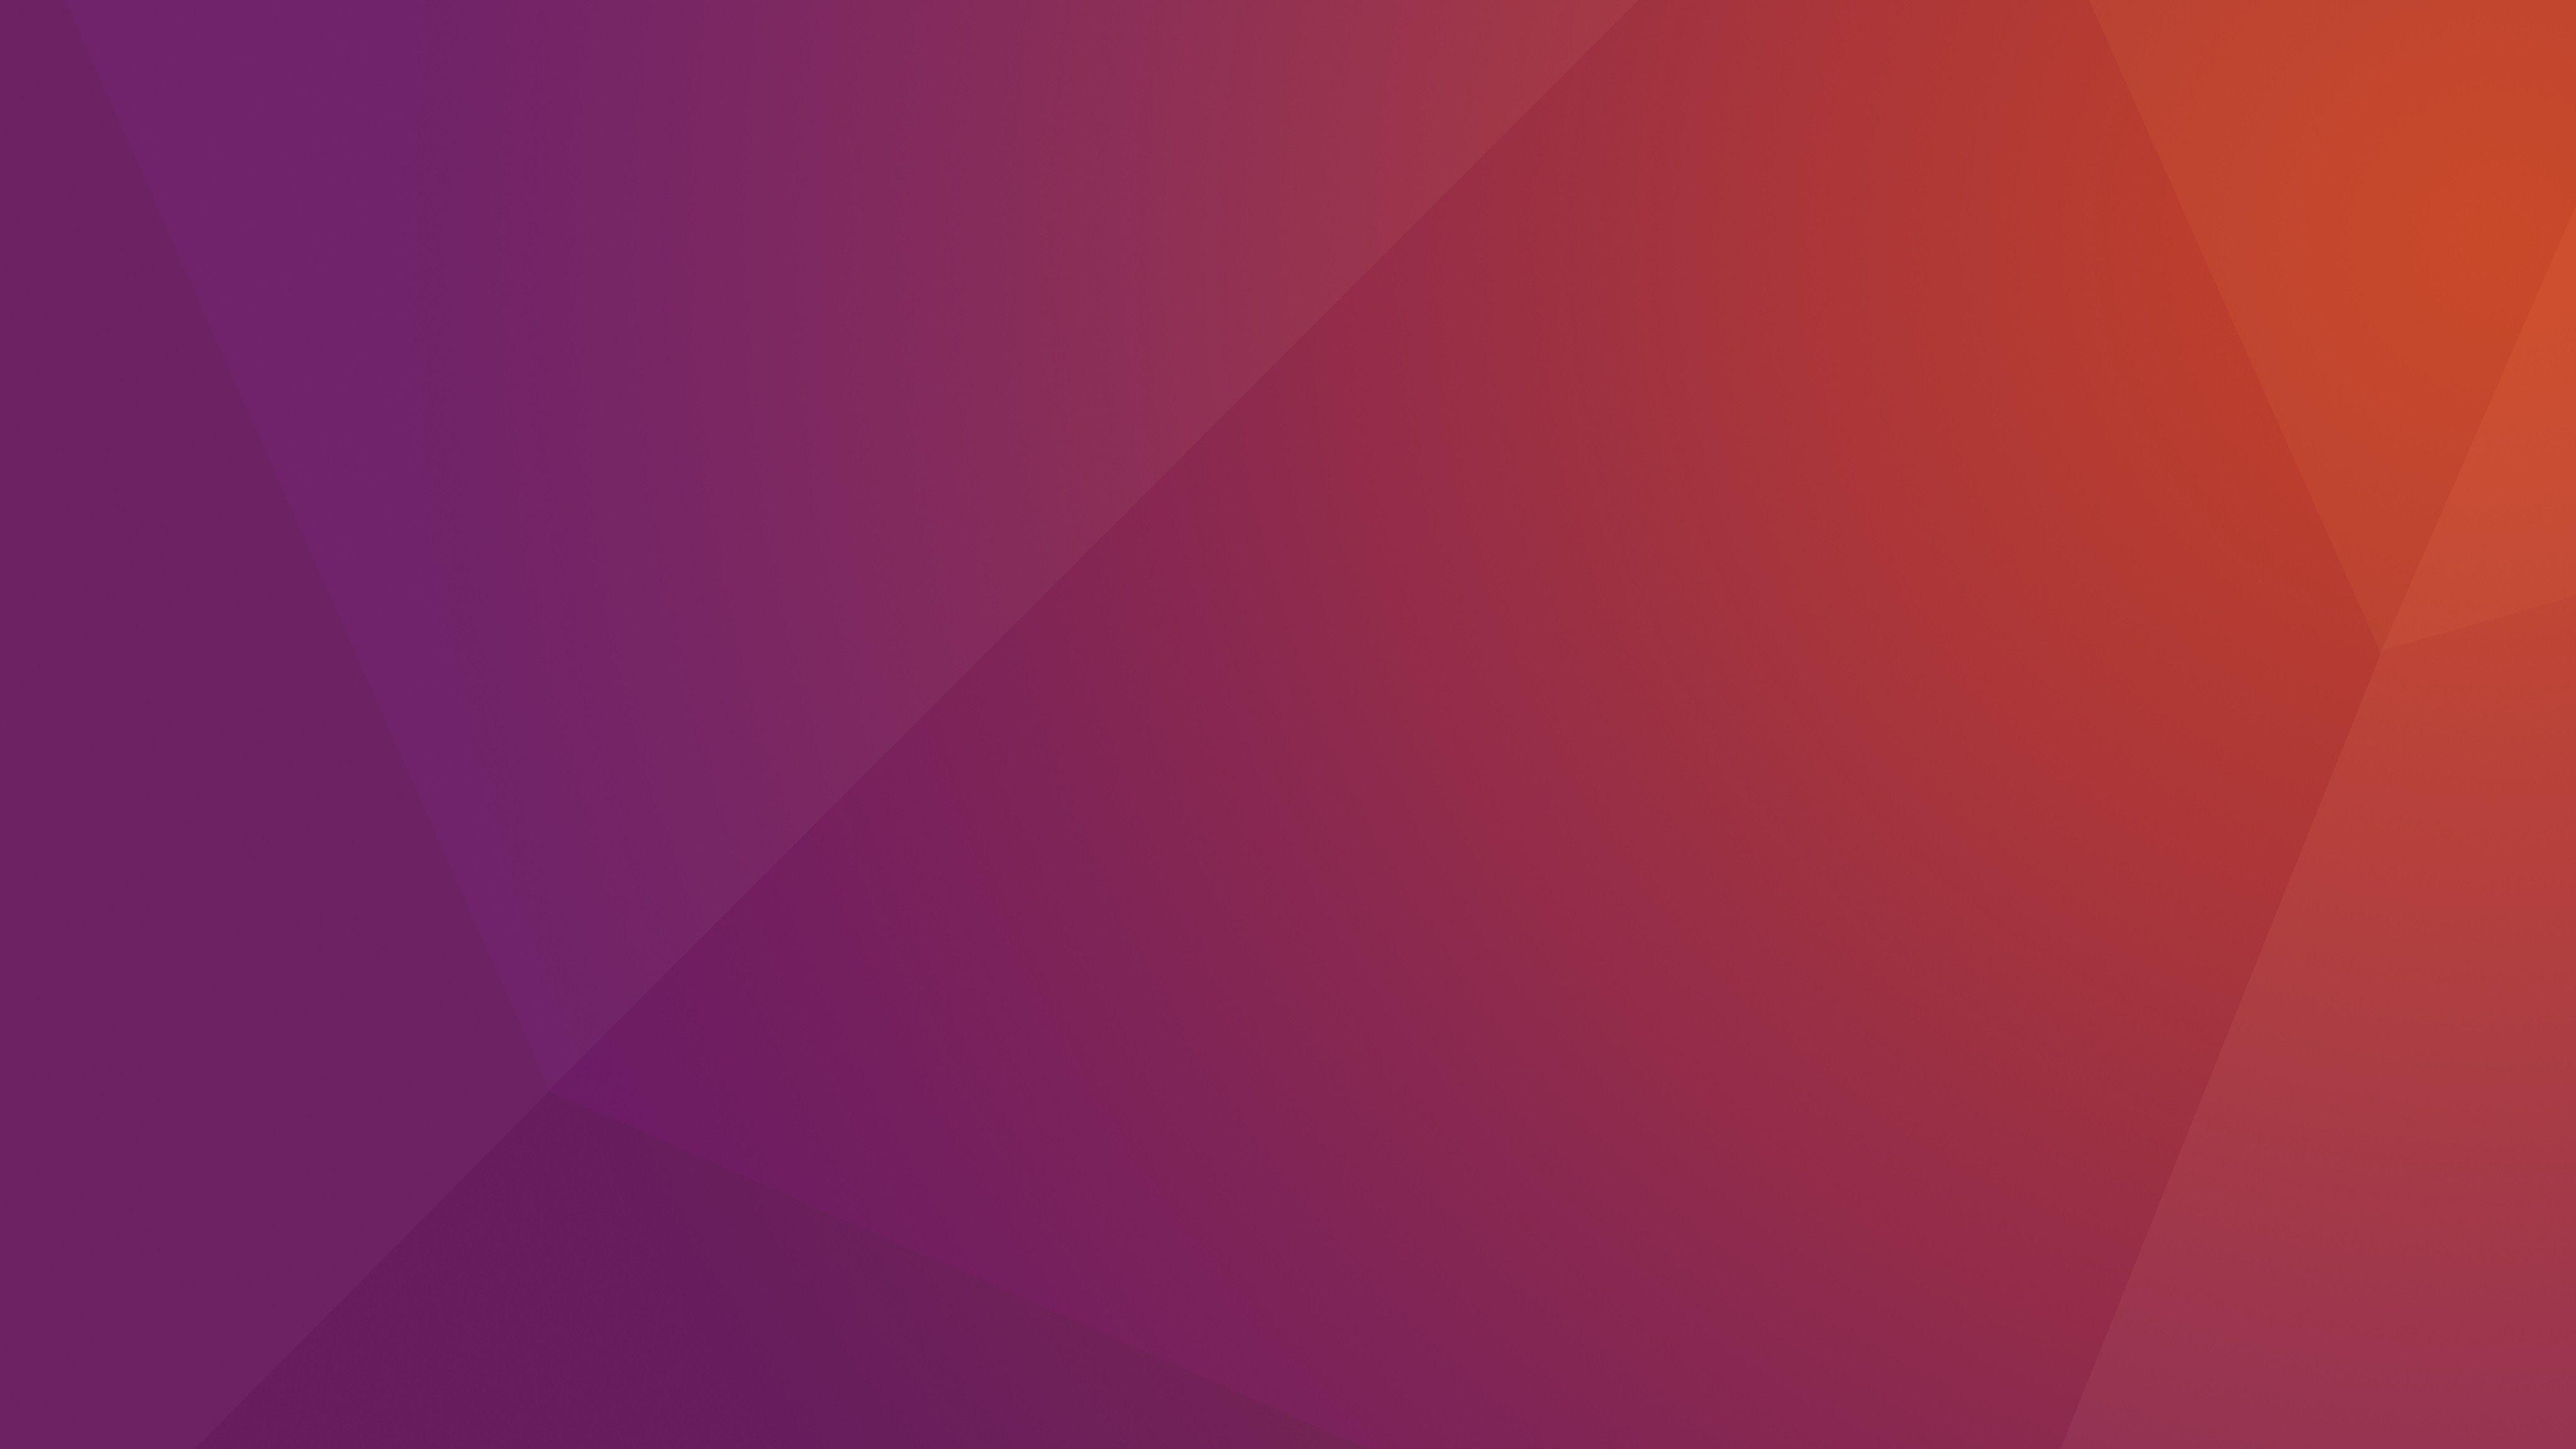 Ubuntu 16.04 LTS Wallpaper Revealed for Desktop and Phone